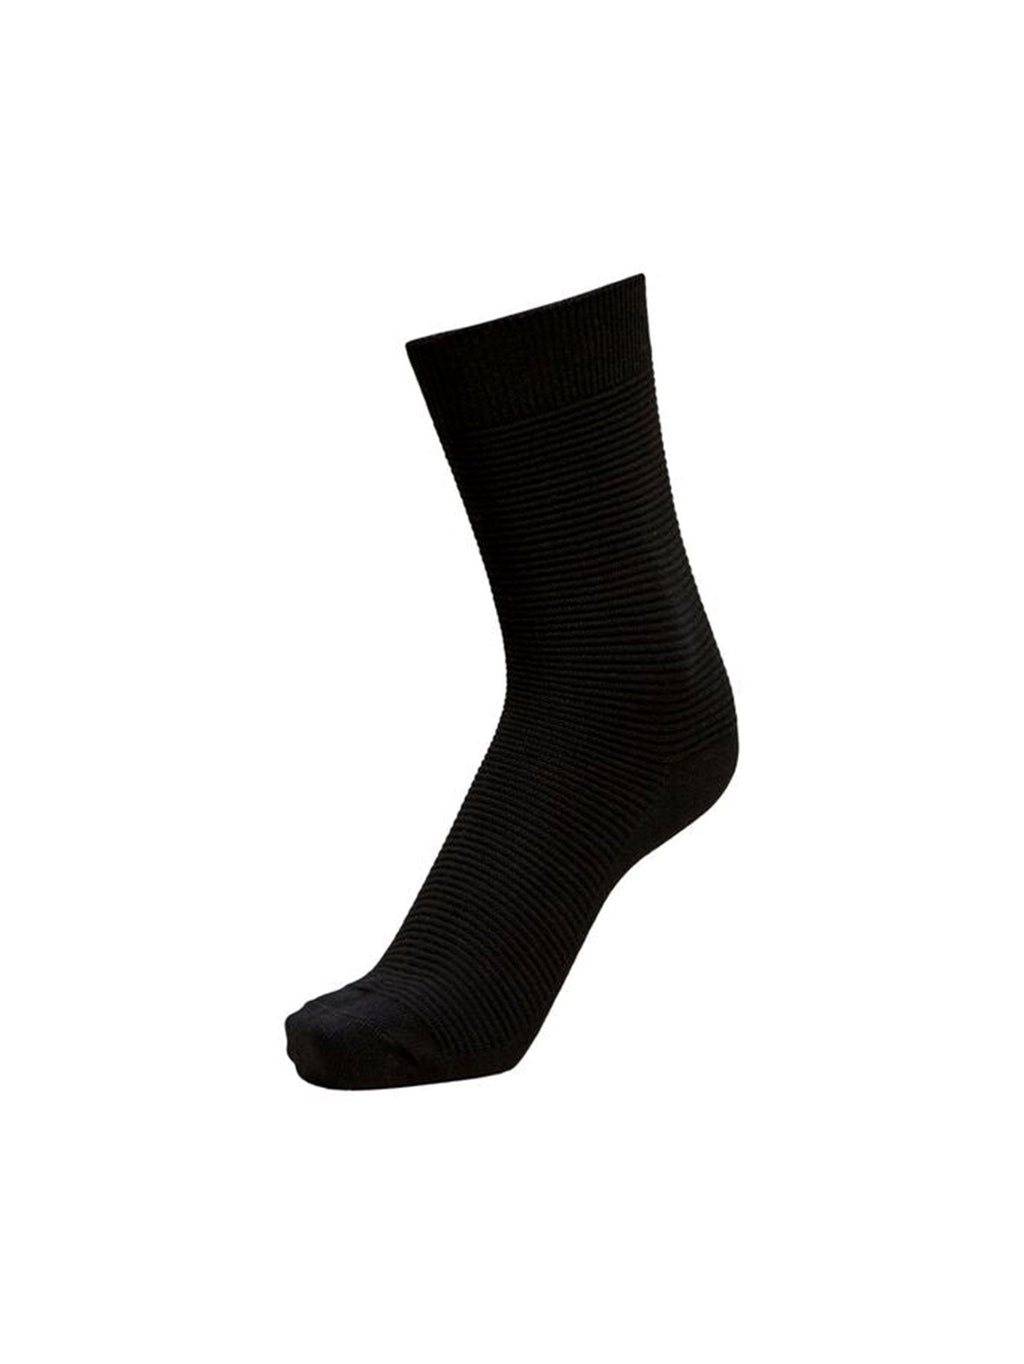 Premium rebra čarape - crne (10 pcs).